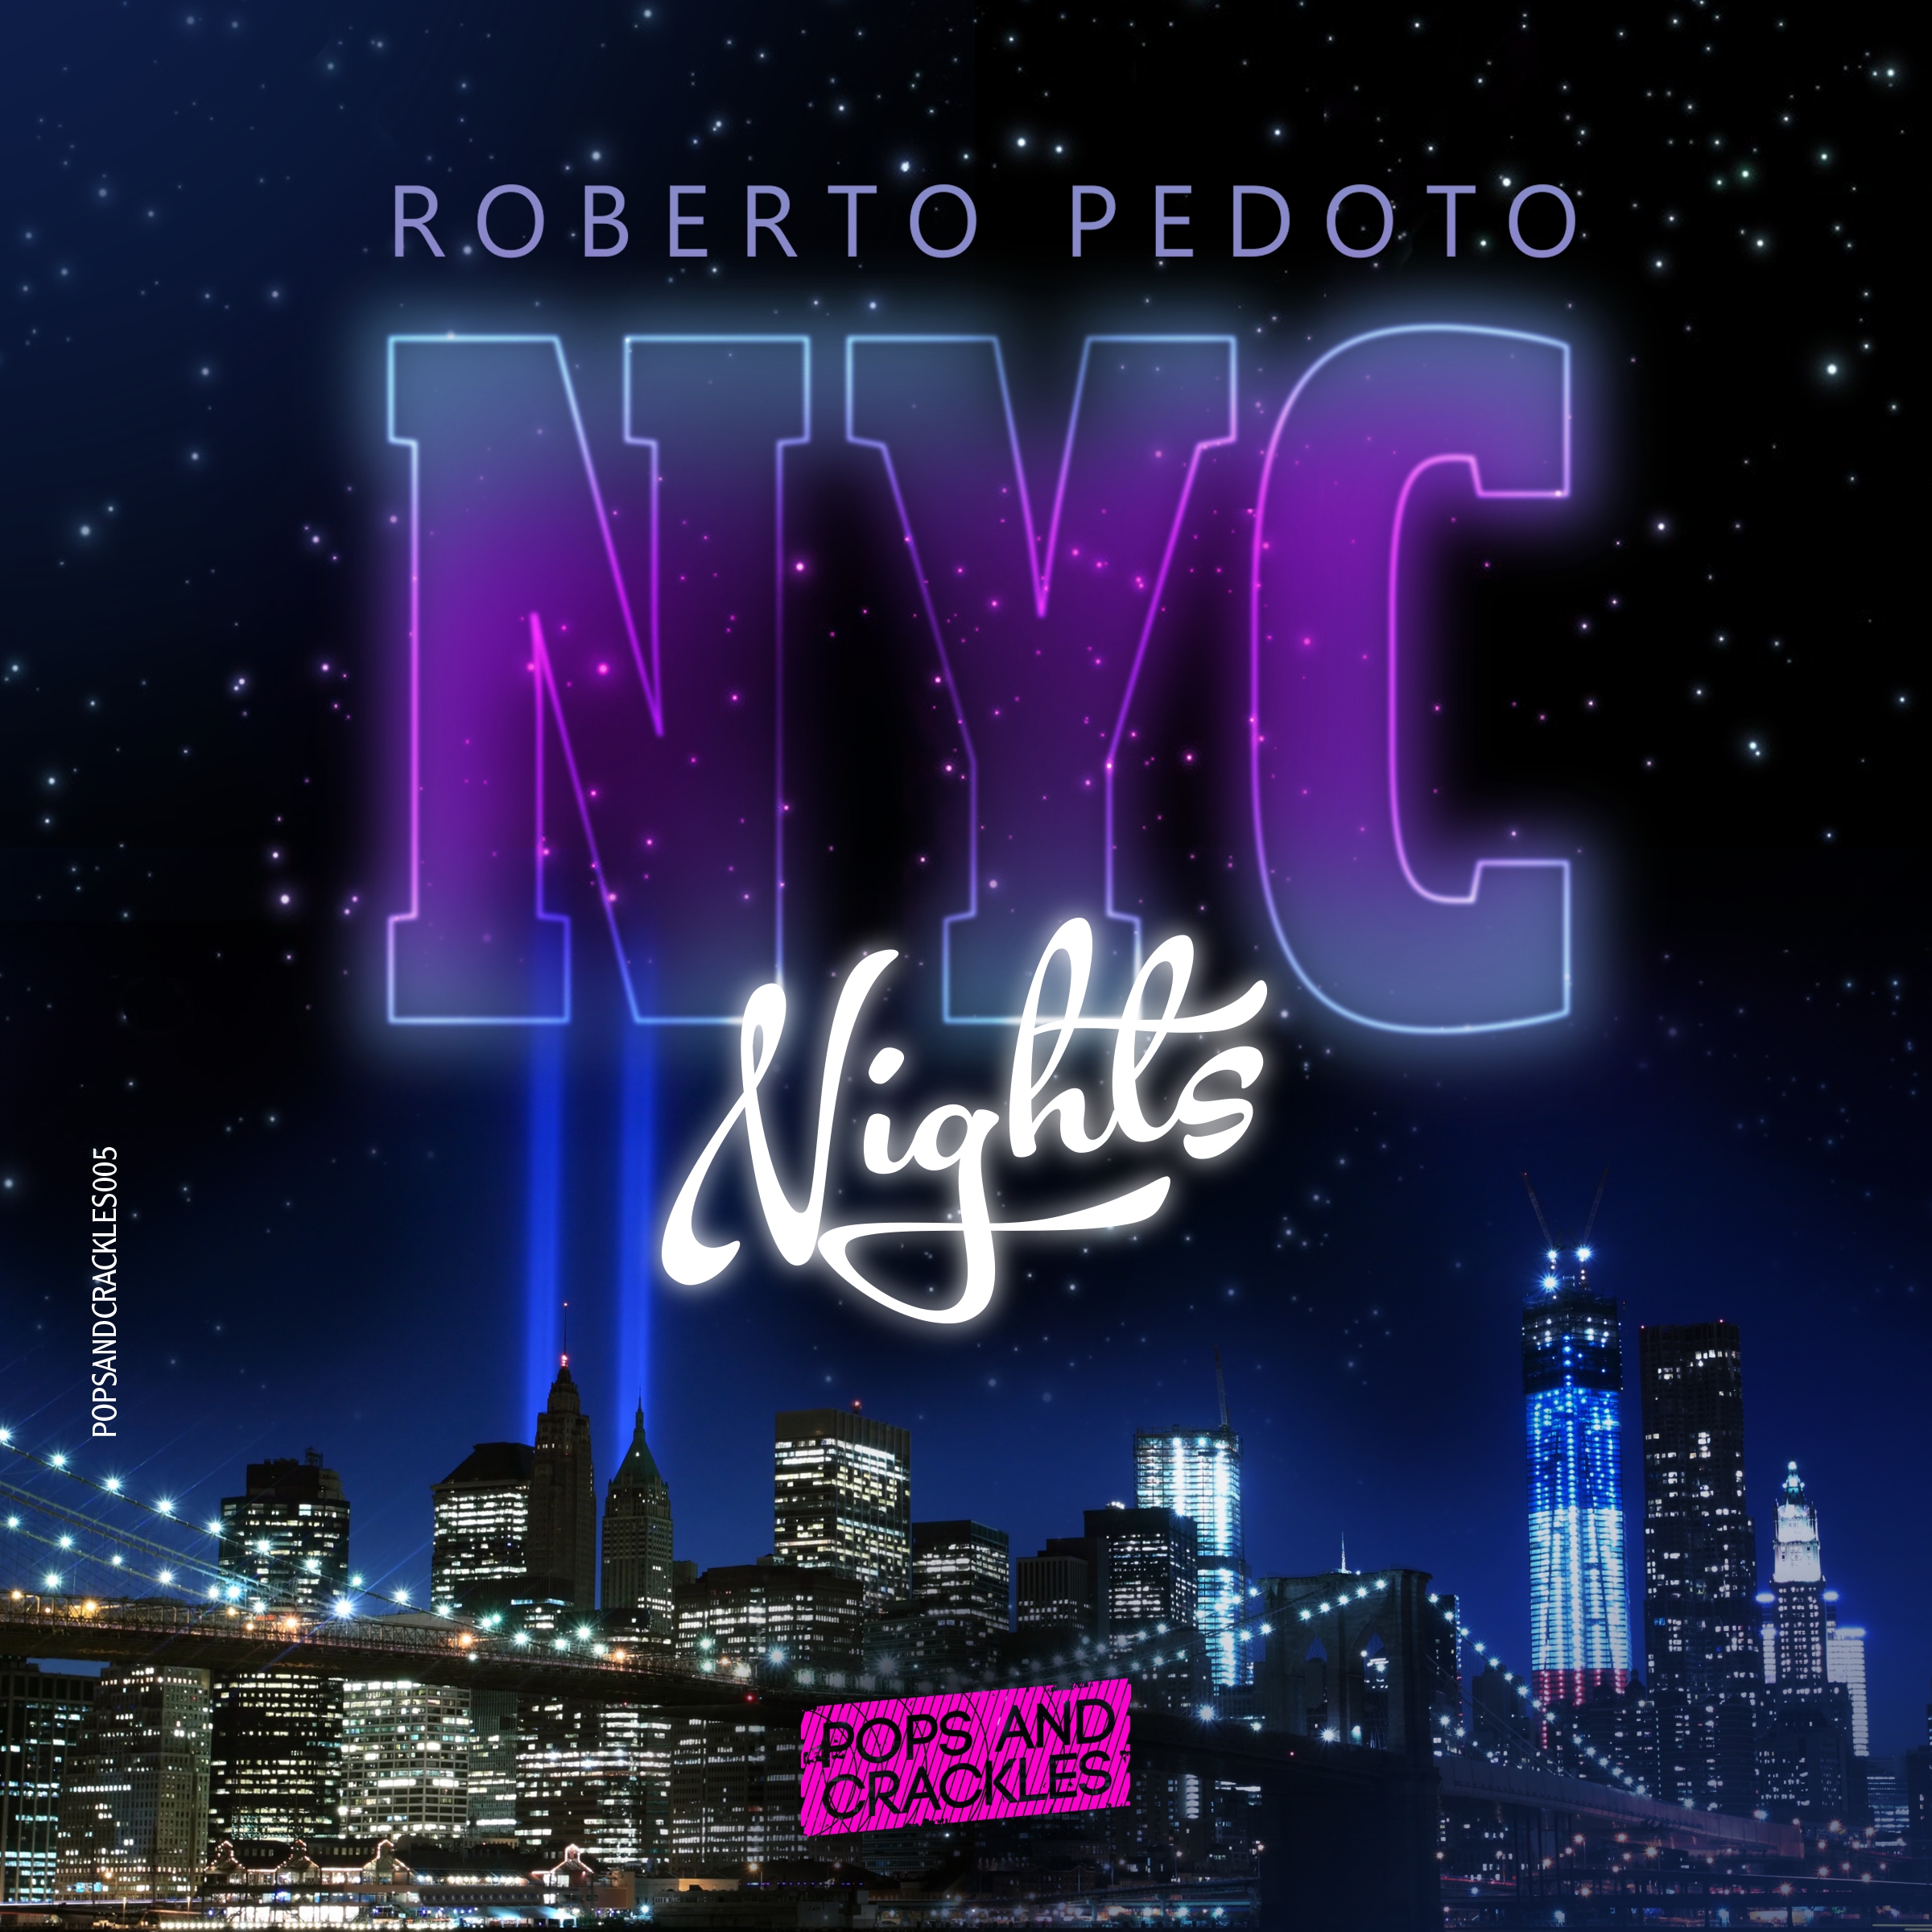 New York City Nights